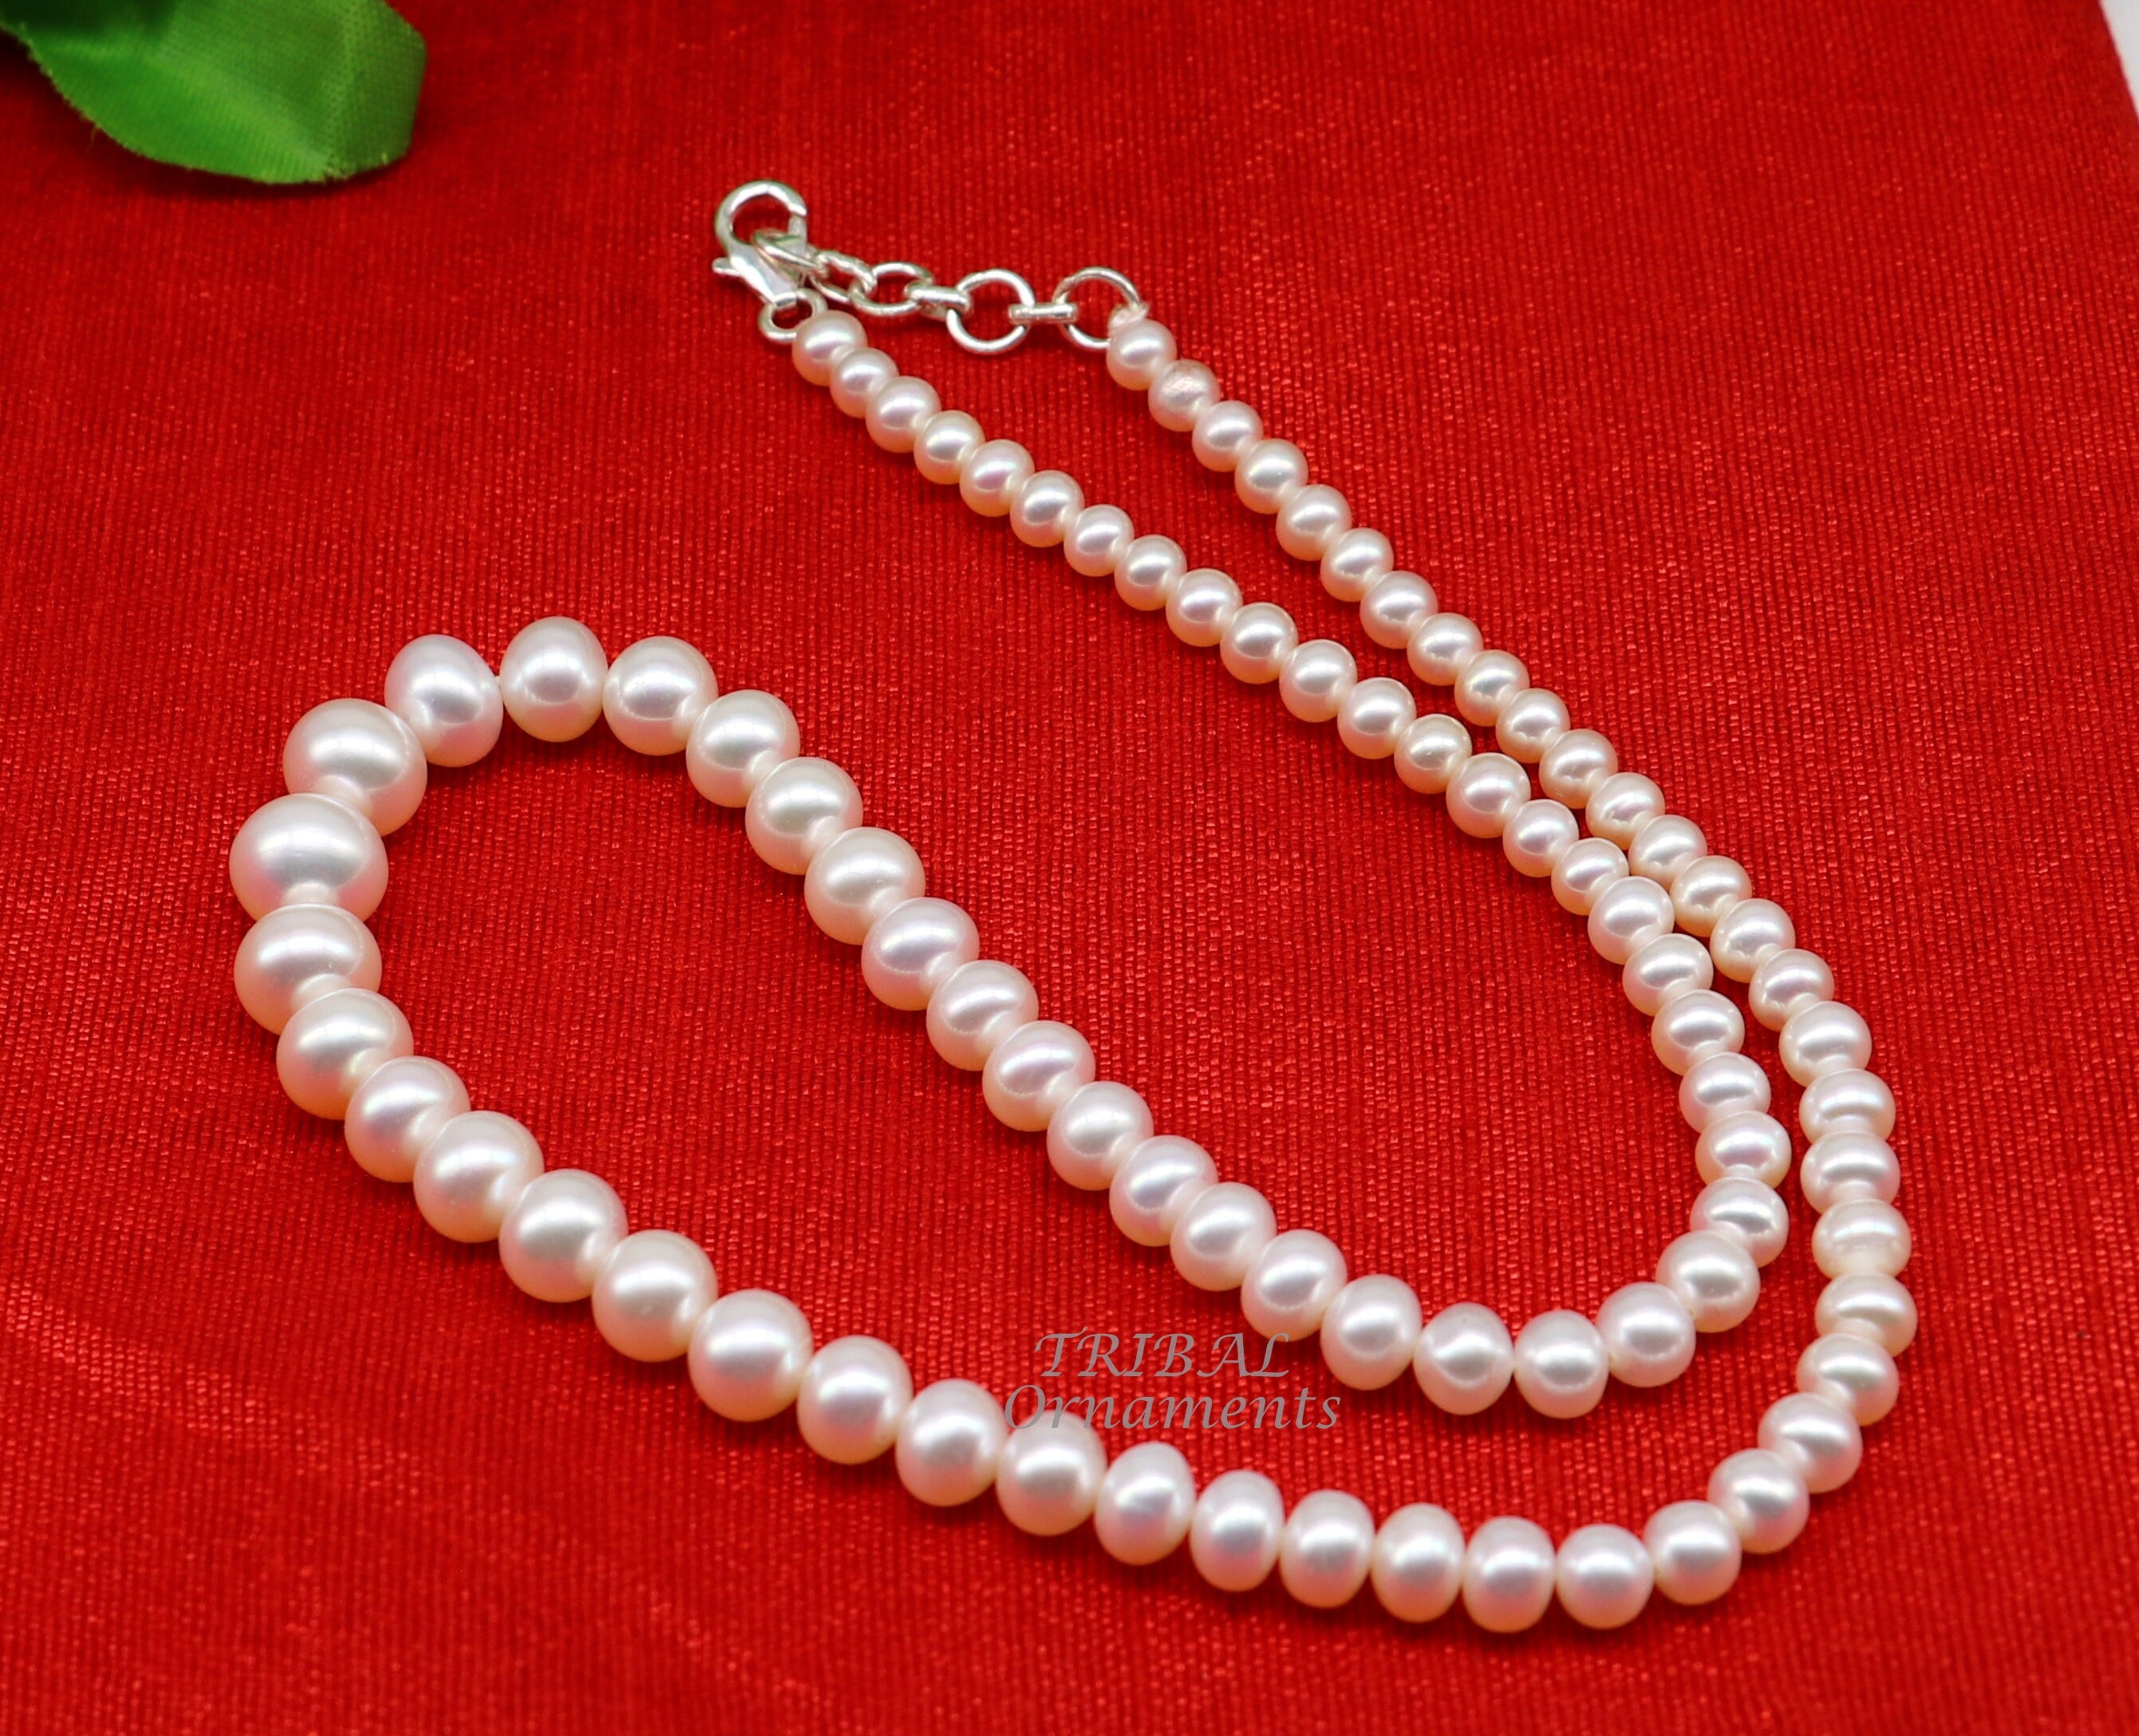 Sukkhi Royal Gold Plated Pearl String Mala Necklace For Women - Sukkhi.com